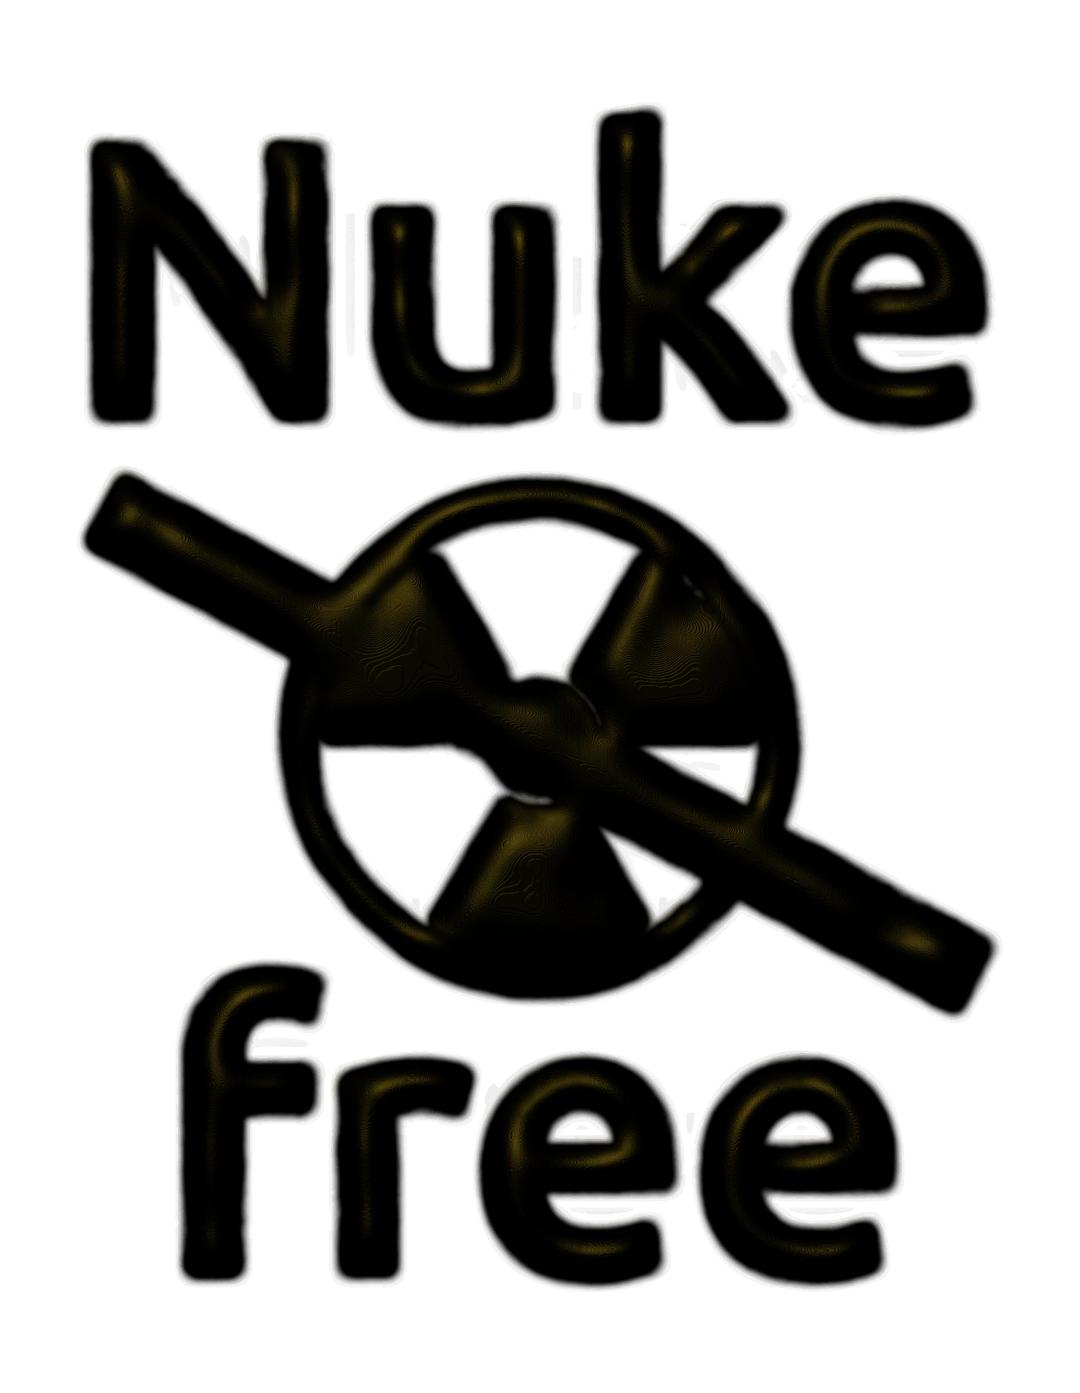 Nuke-free Eroded metal png transparent